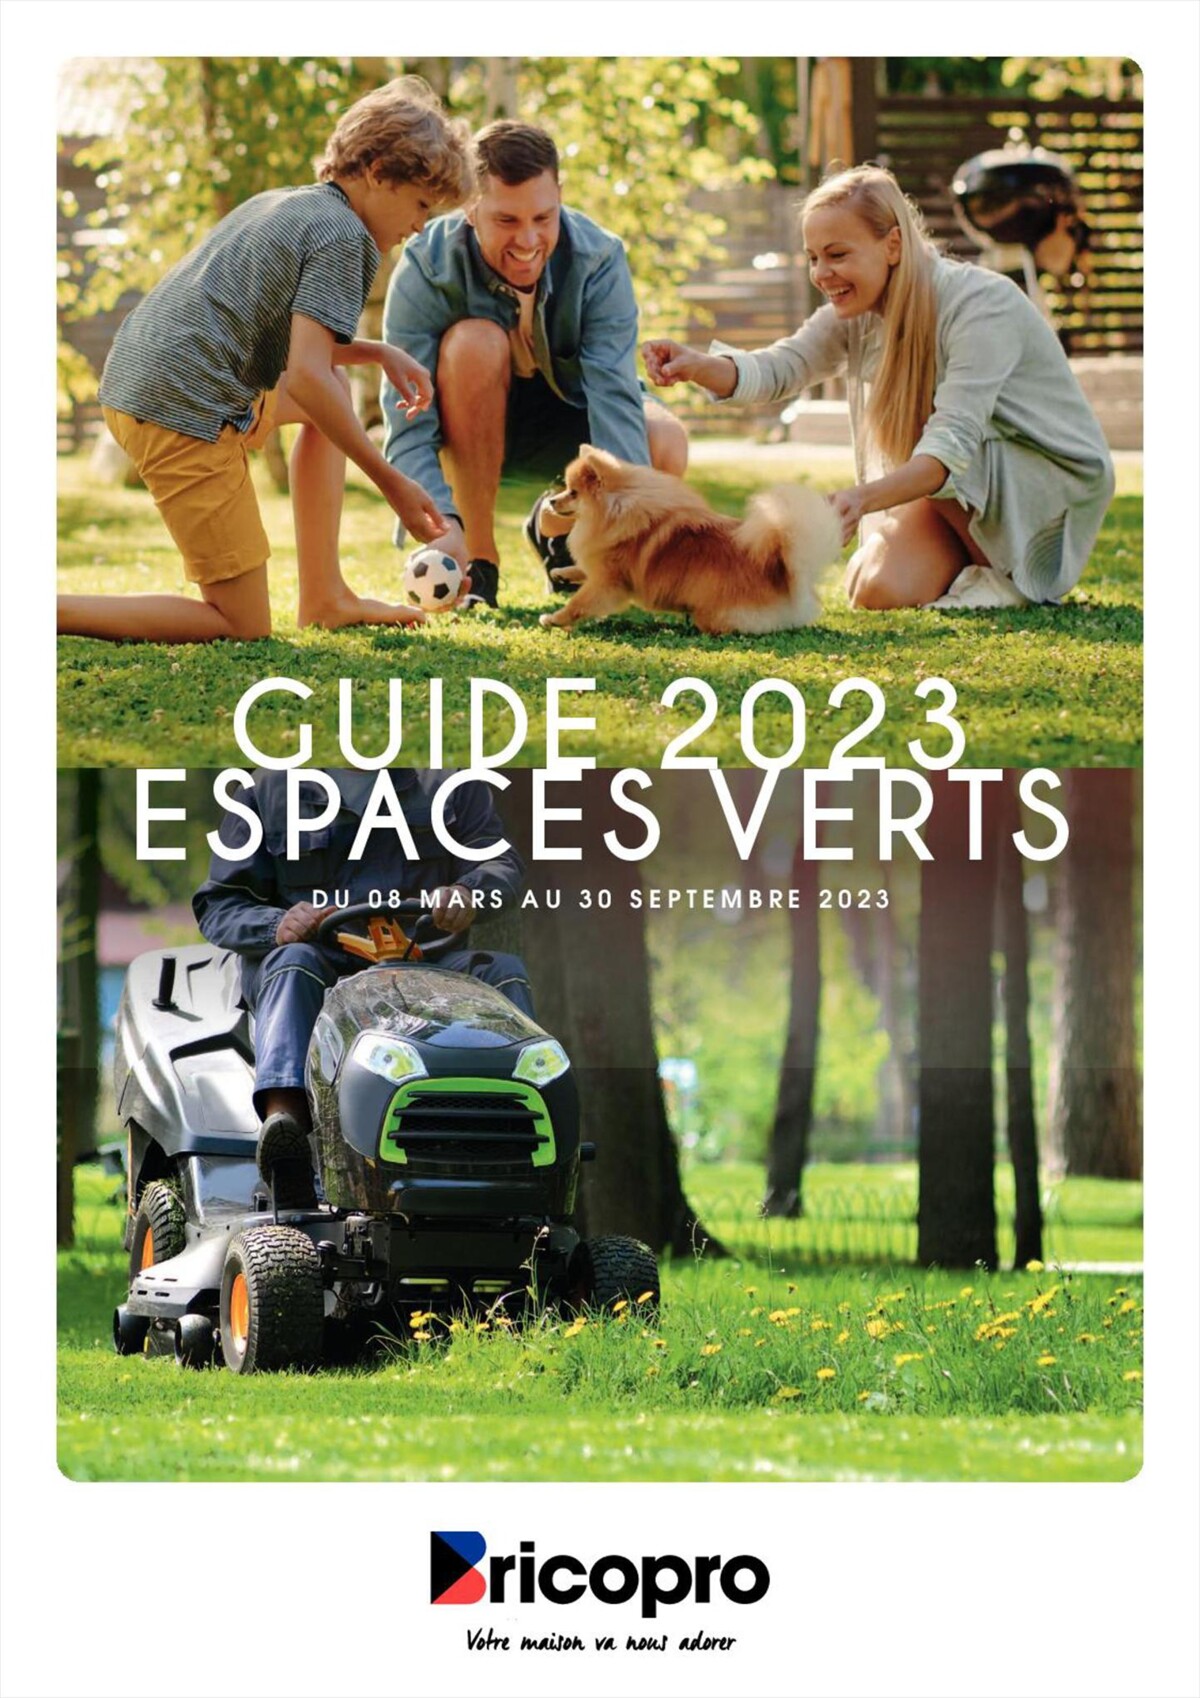 Catalogue GUIDE 2023 ESPACES VERTS, page 00001